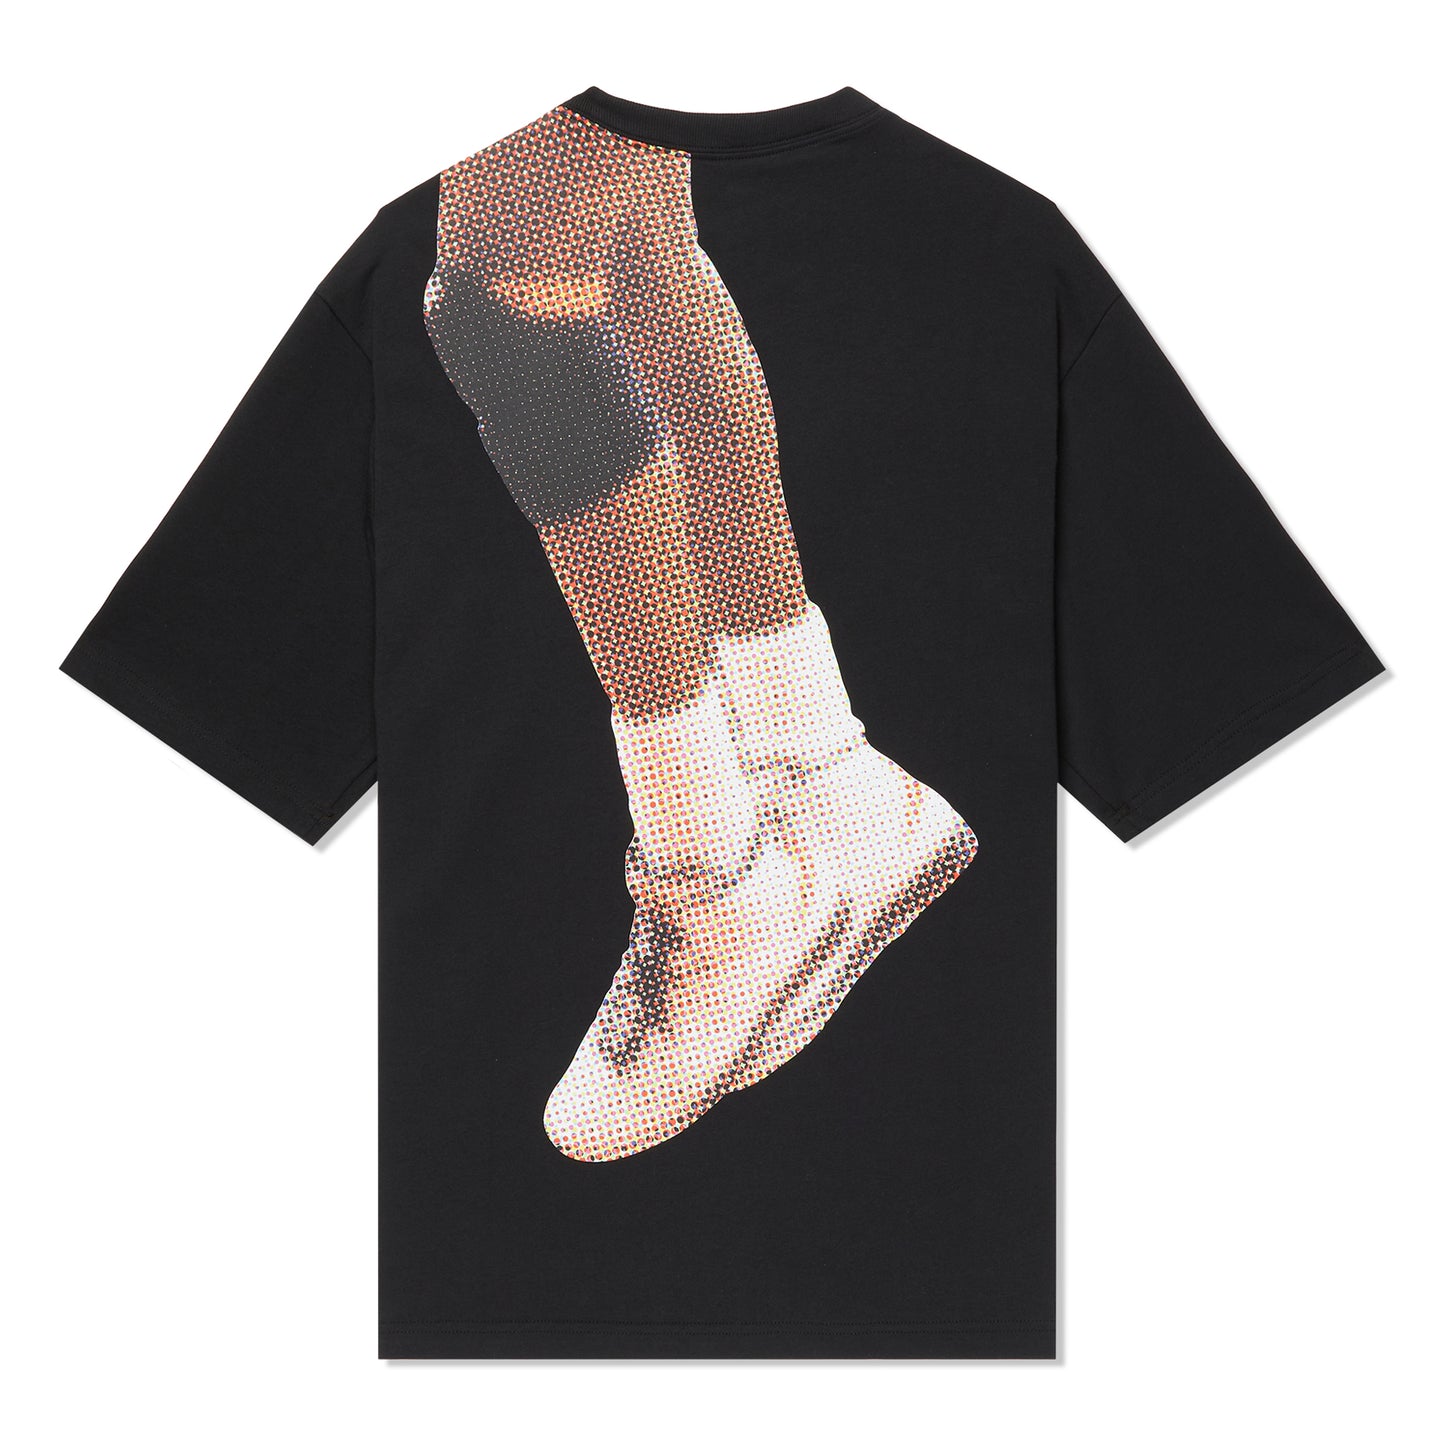 Nike Jordan Flight Heritage 85 T-Shirt (Black)